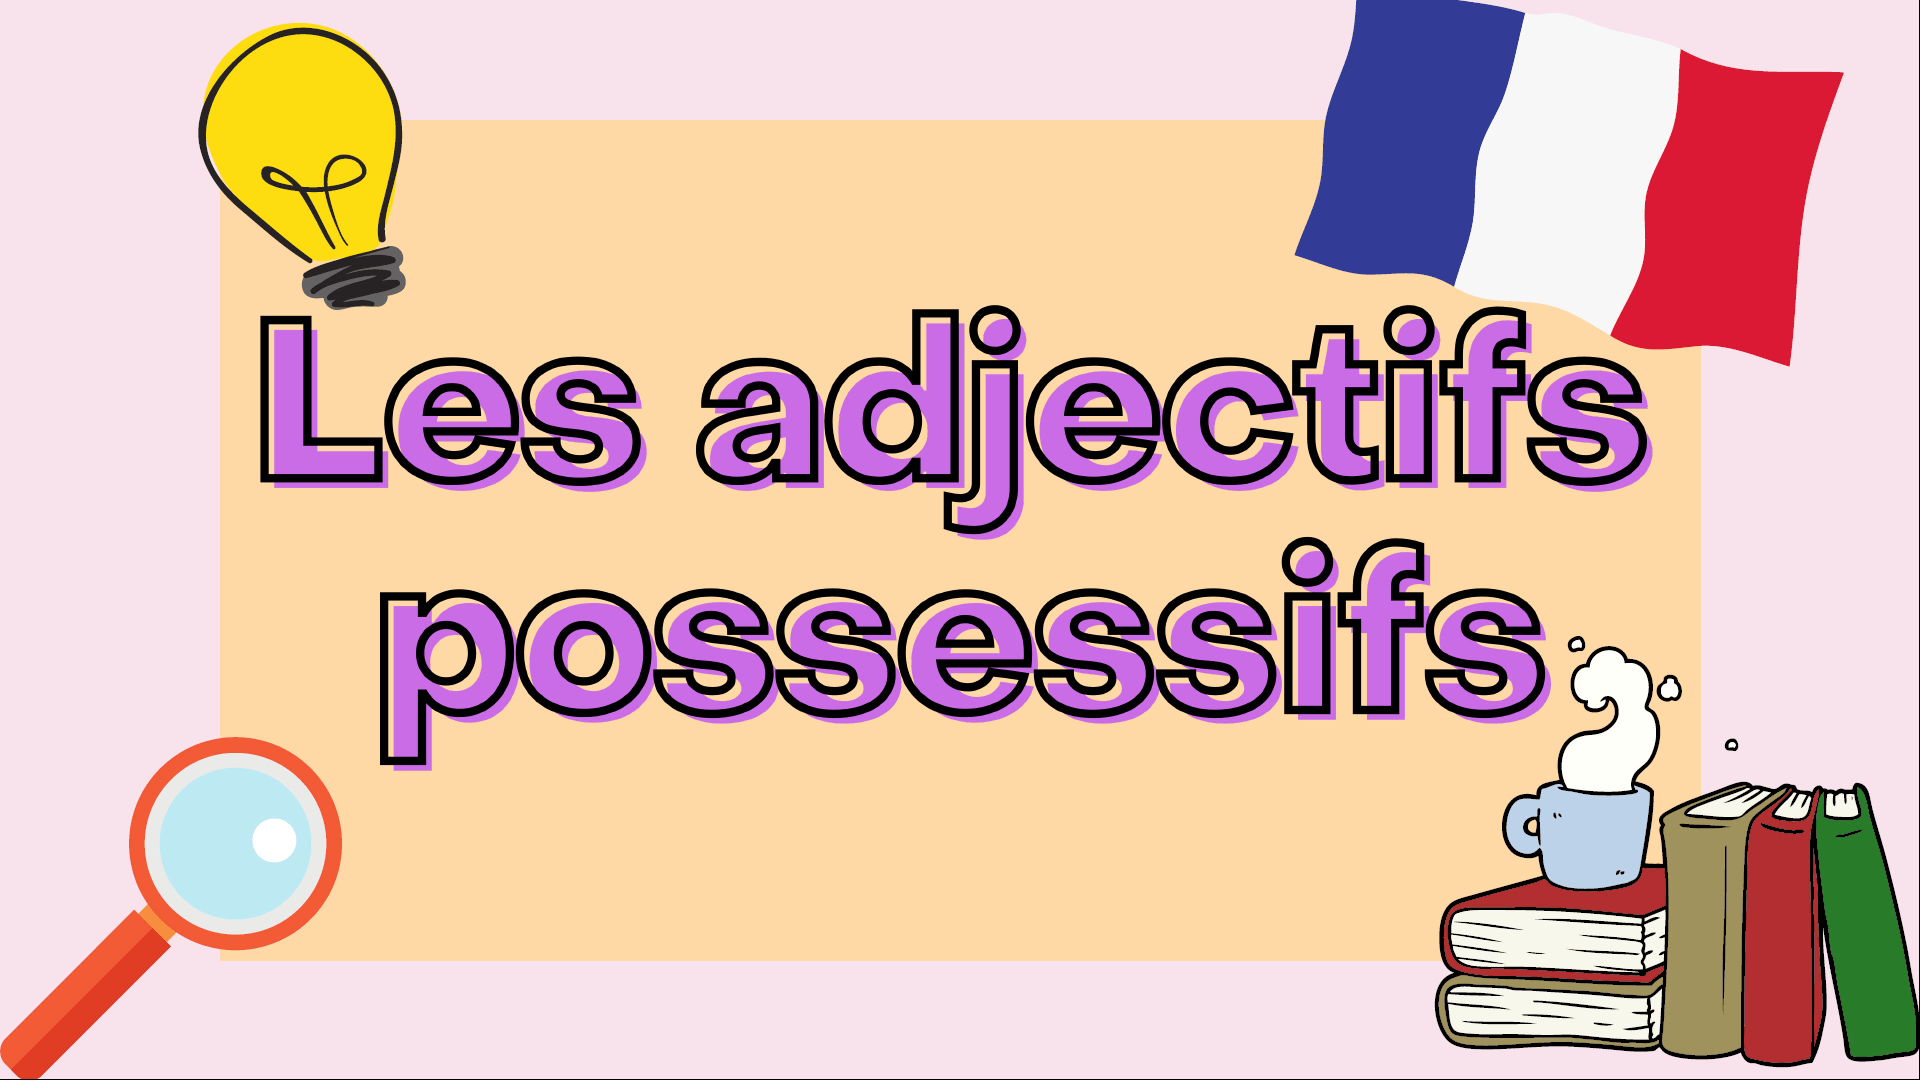 french possessive adjectives - adjectifs possessifs en français